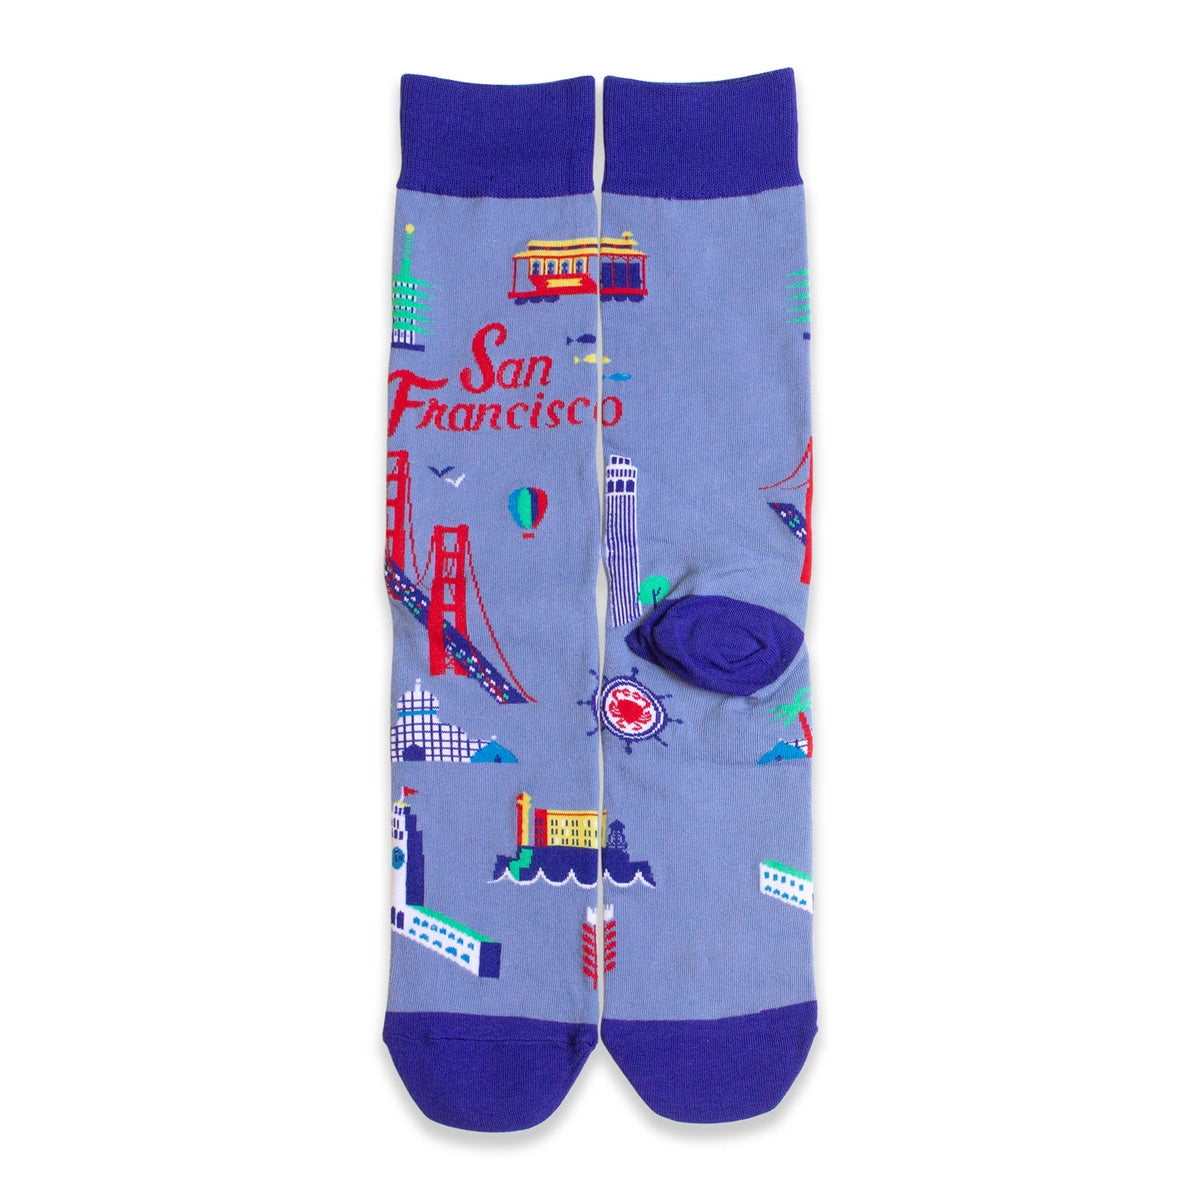 Blue novelty socks with multicolored designs of San Francisco landmarks, including the Golden Gate Bridge and Alcatraz Island.